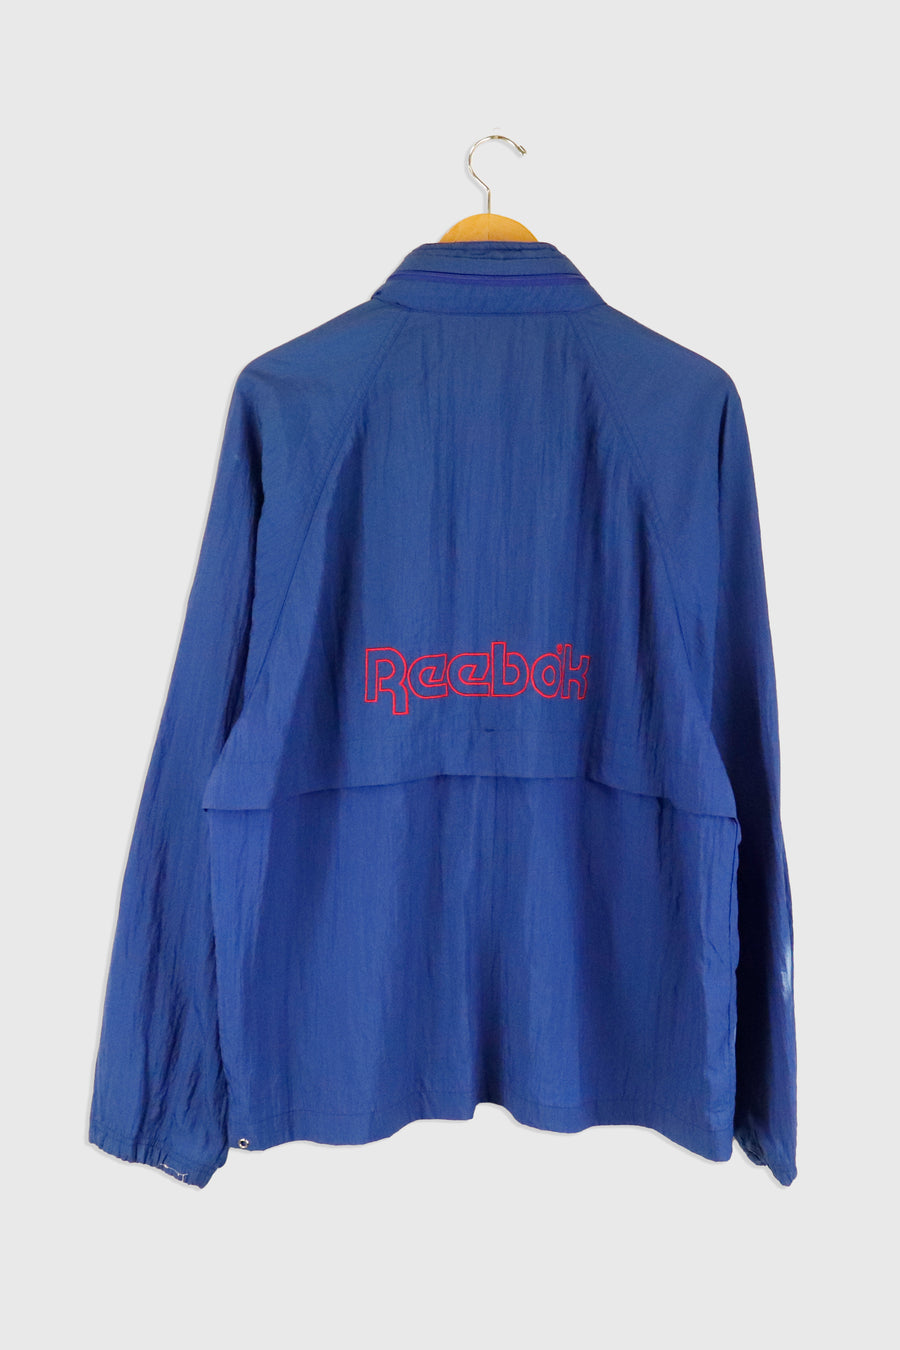 Vintage Reebok Full Zip Hidden Hood Light Weight Jacket